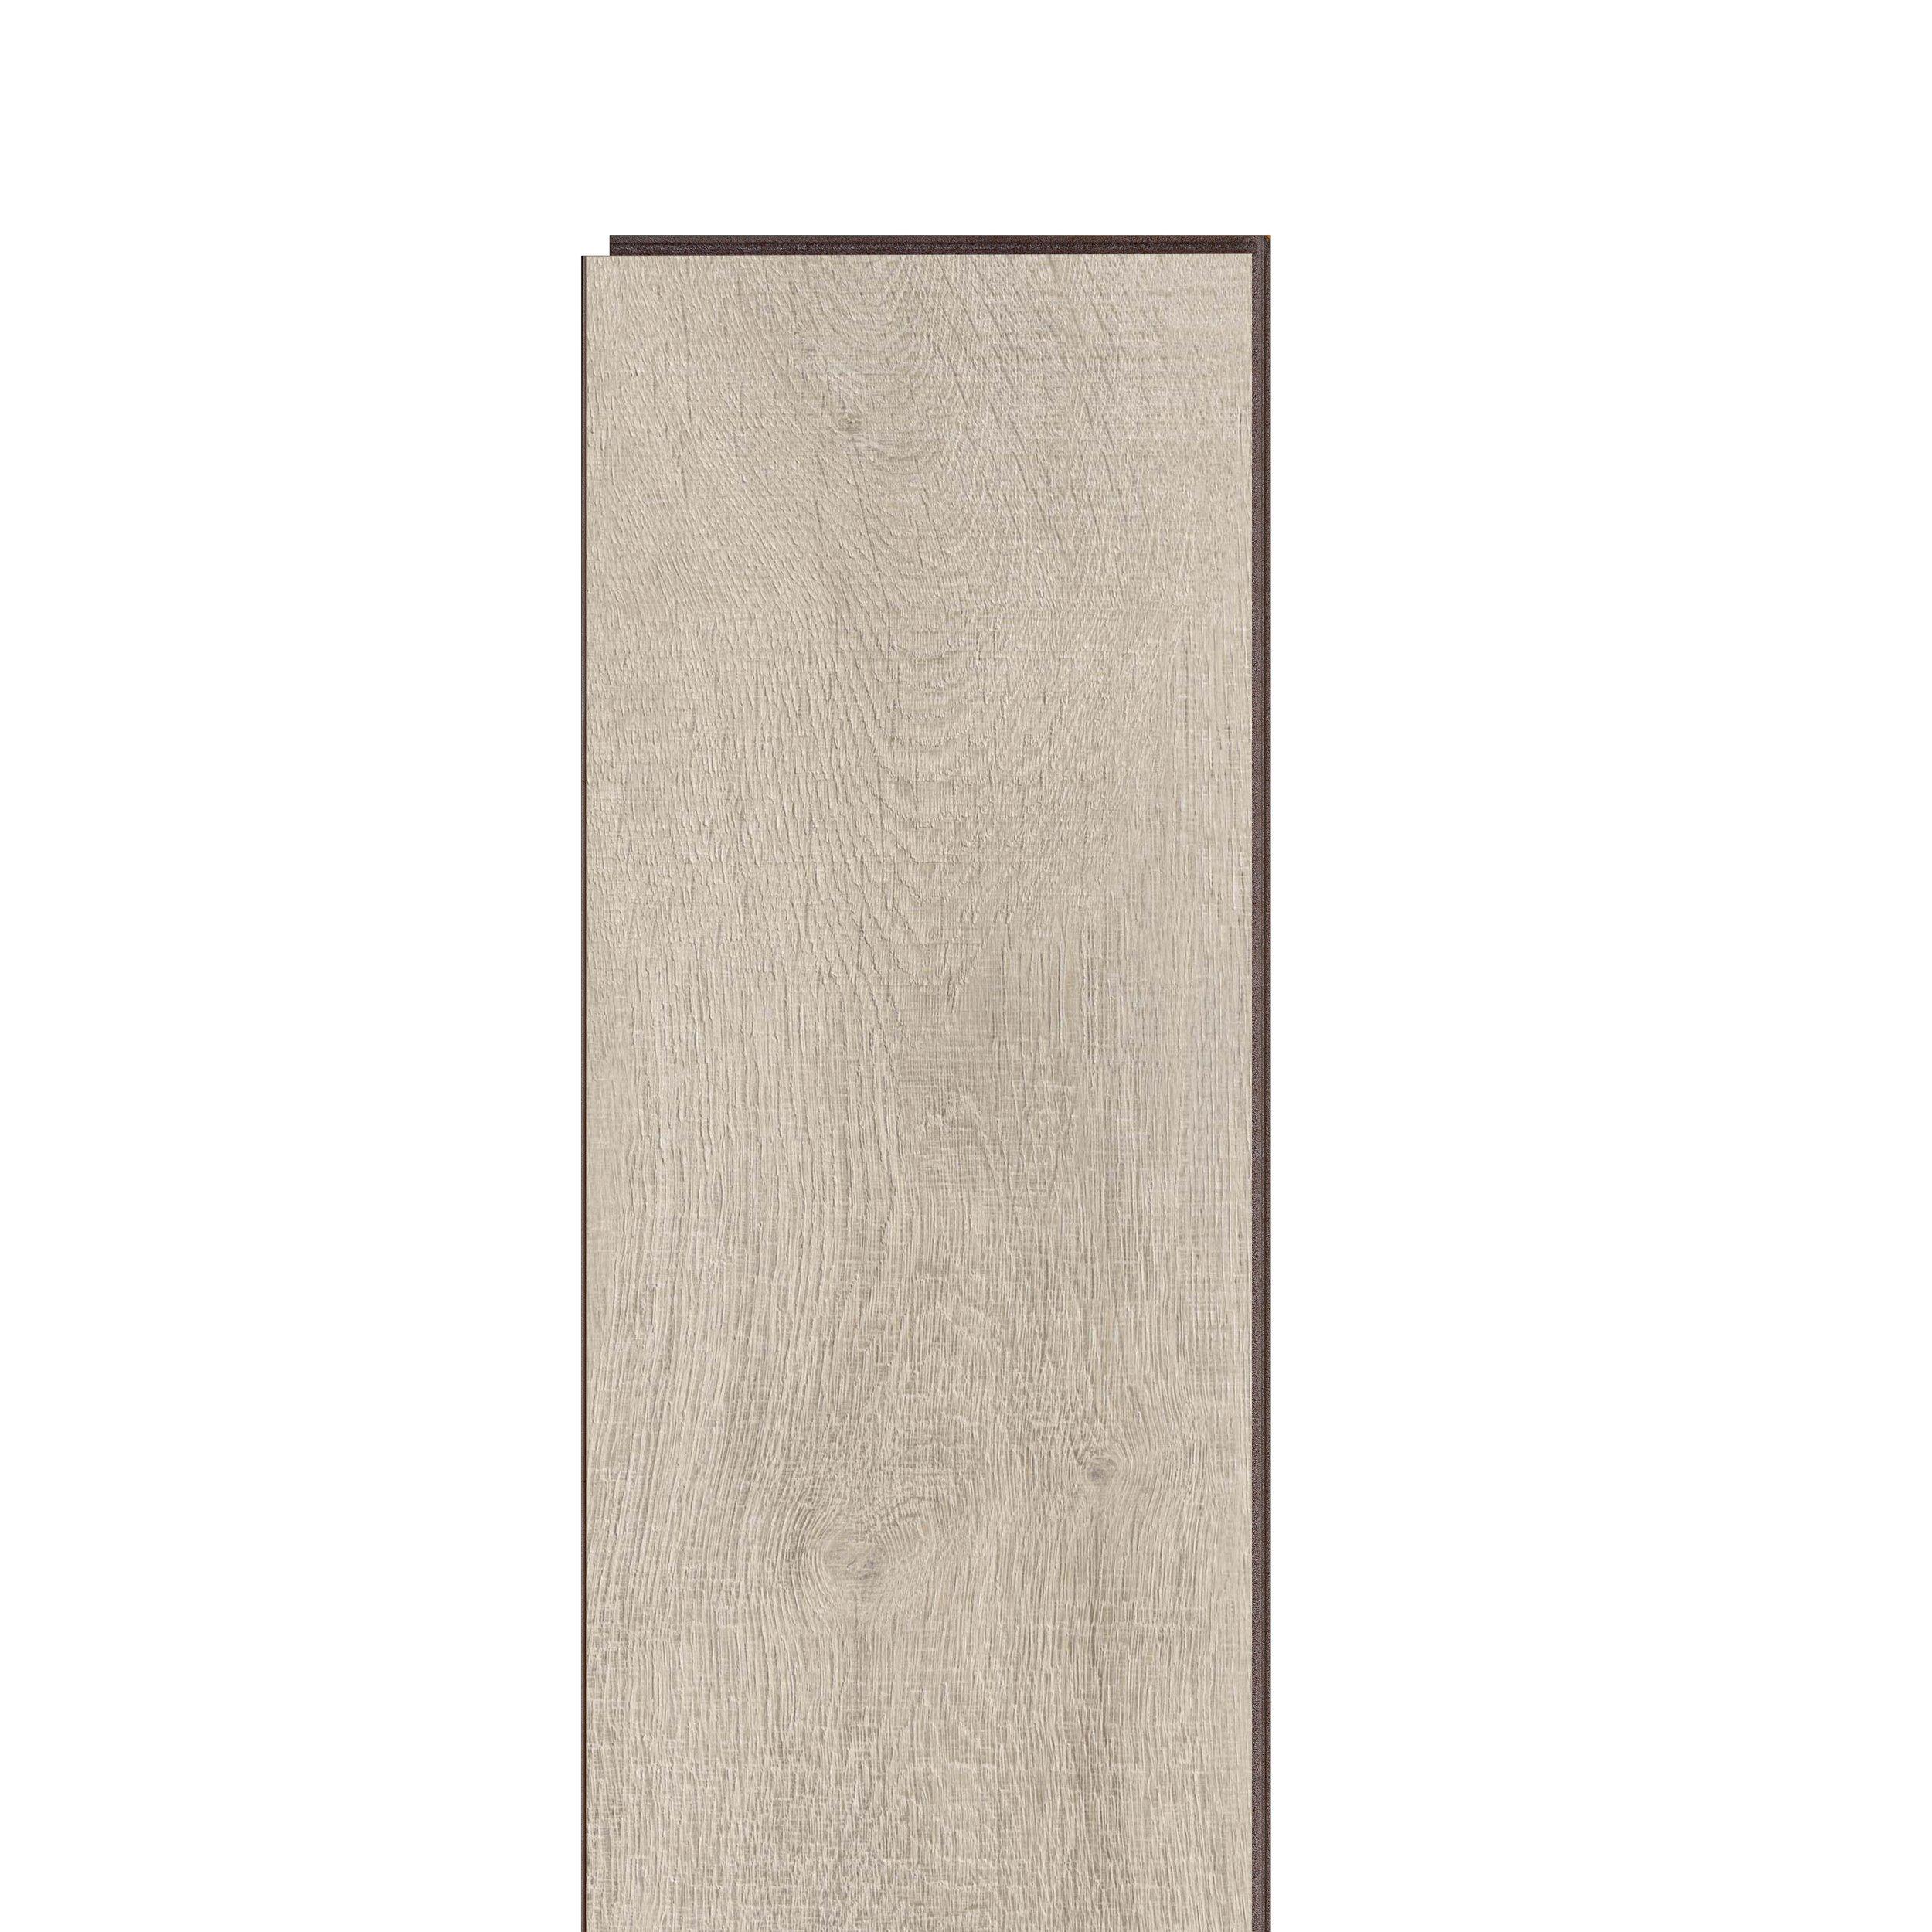 Wrightsville Almond Rigid Core Luxury Vinyl Plank - Cork Back